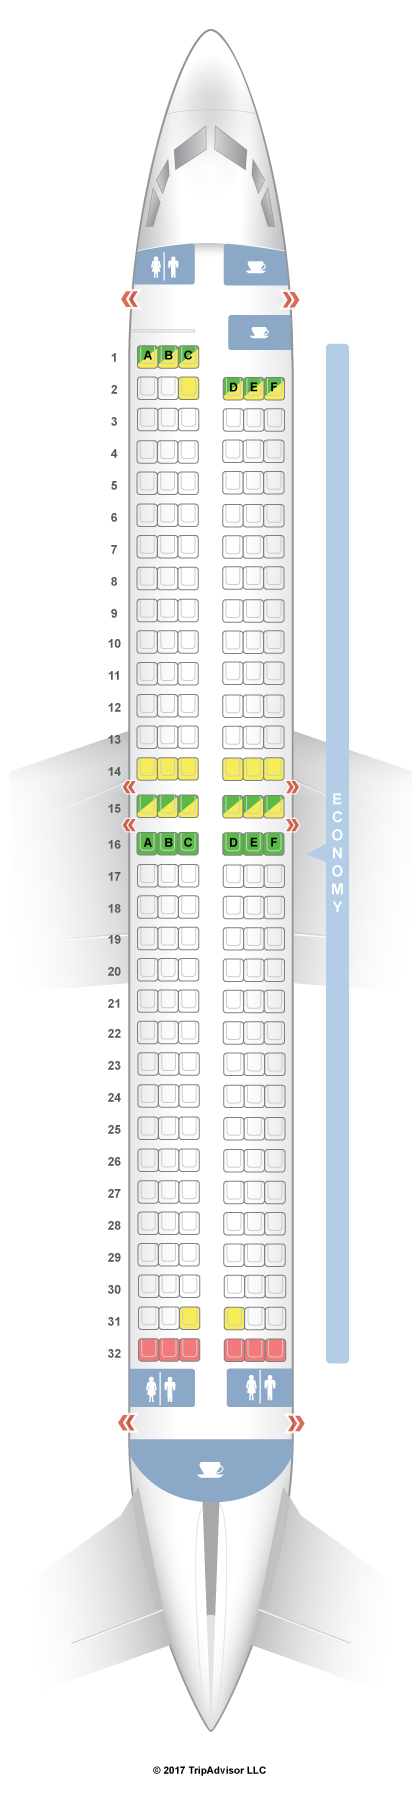 727 Seating Chart